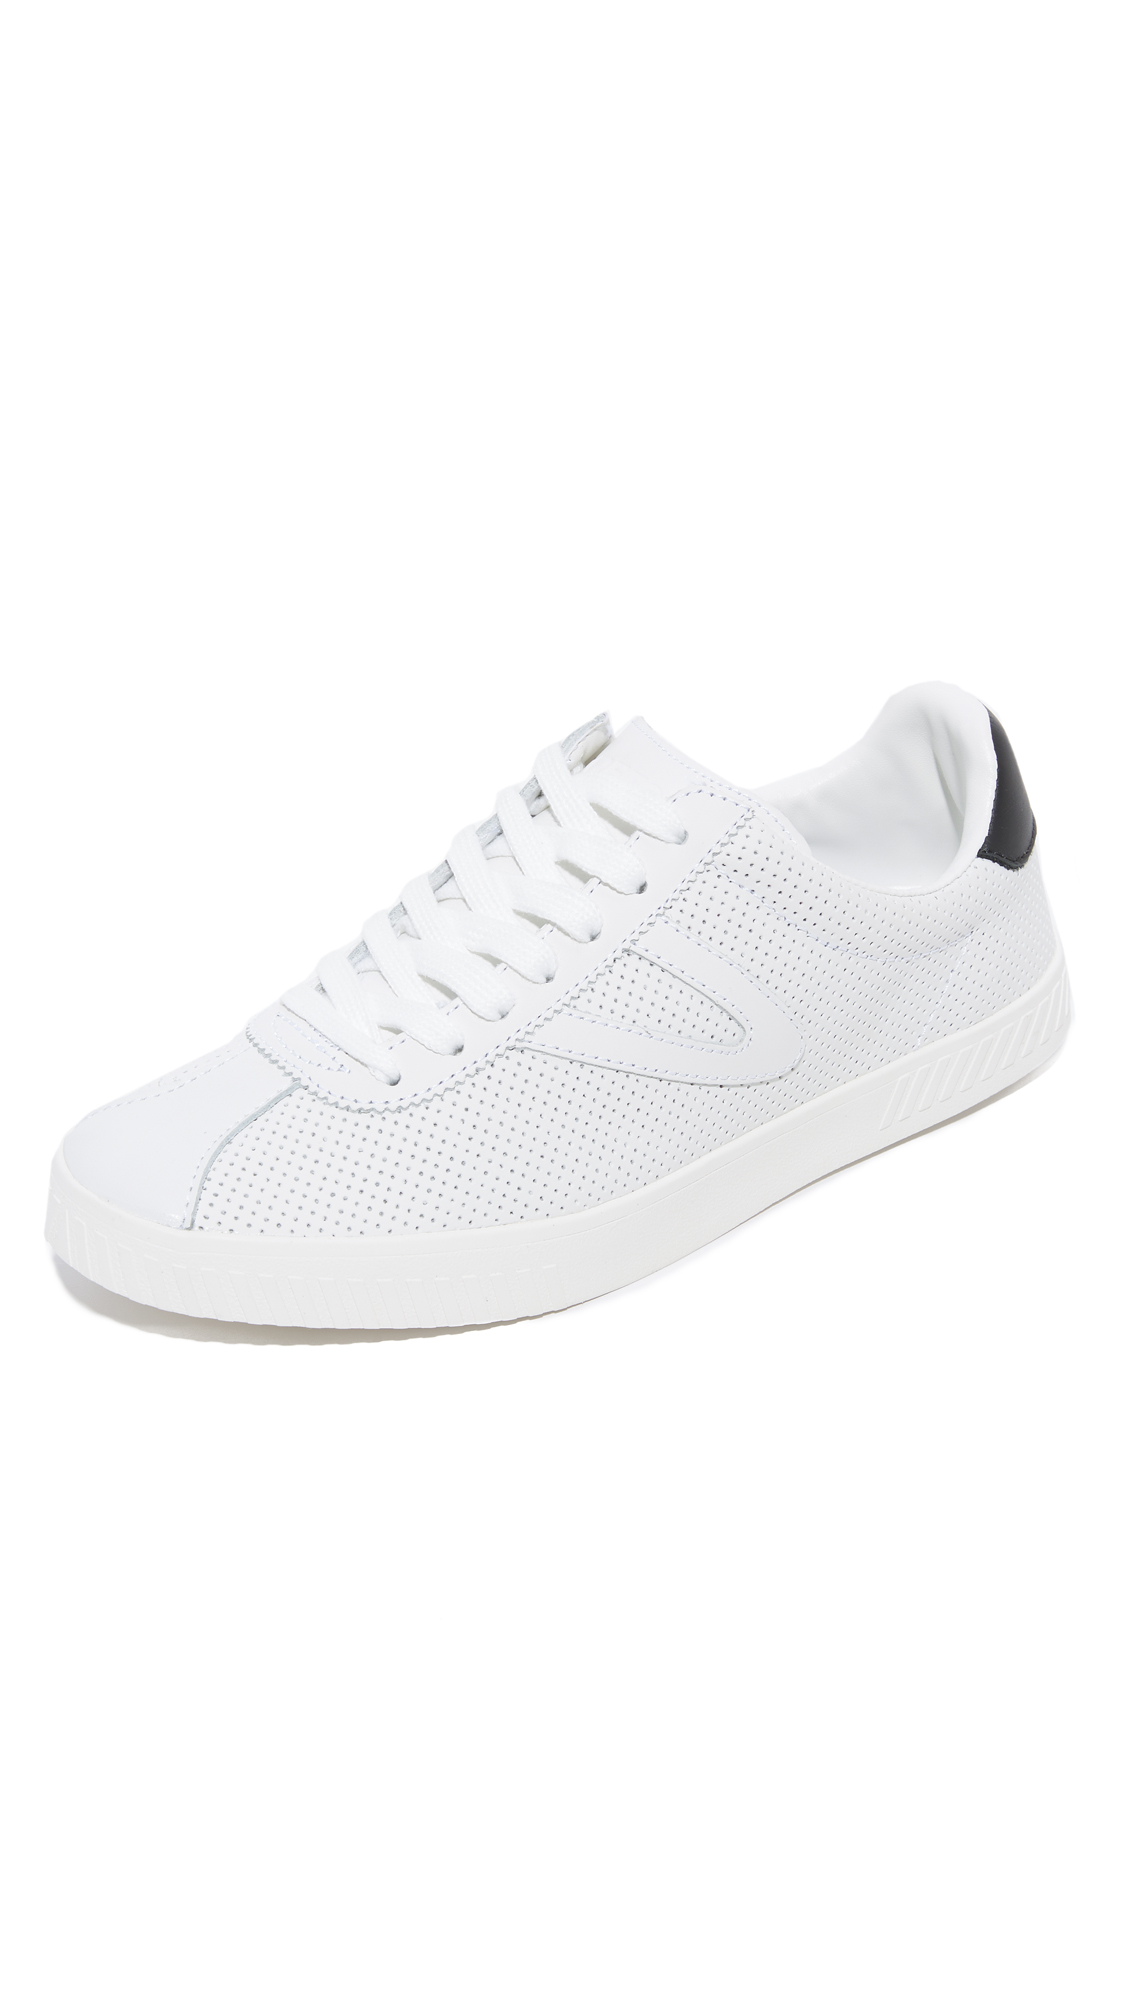 Tretorn Camden Leather Sneakers In White/white | ModeSens